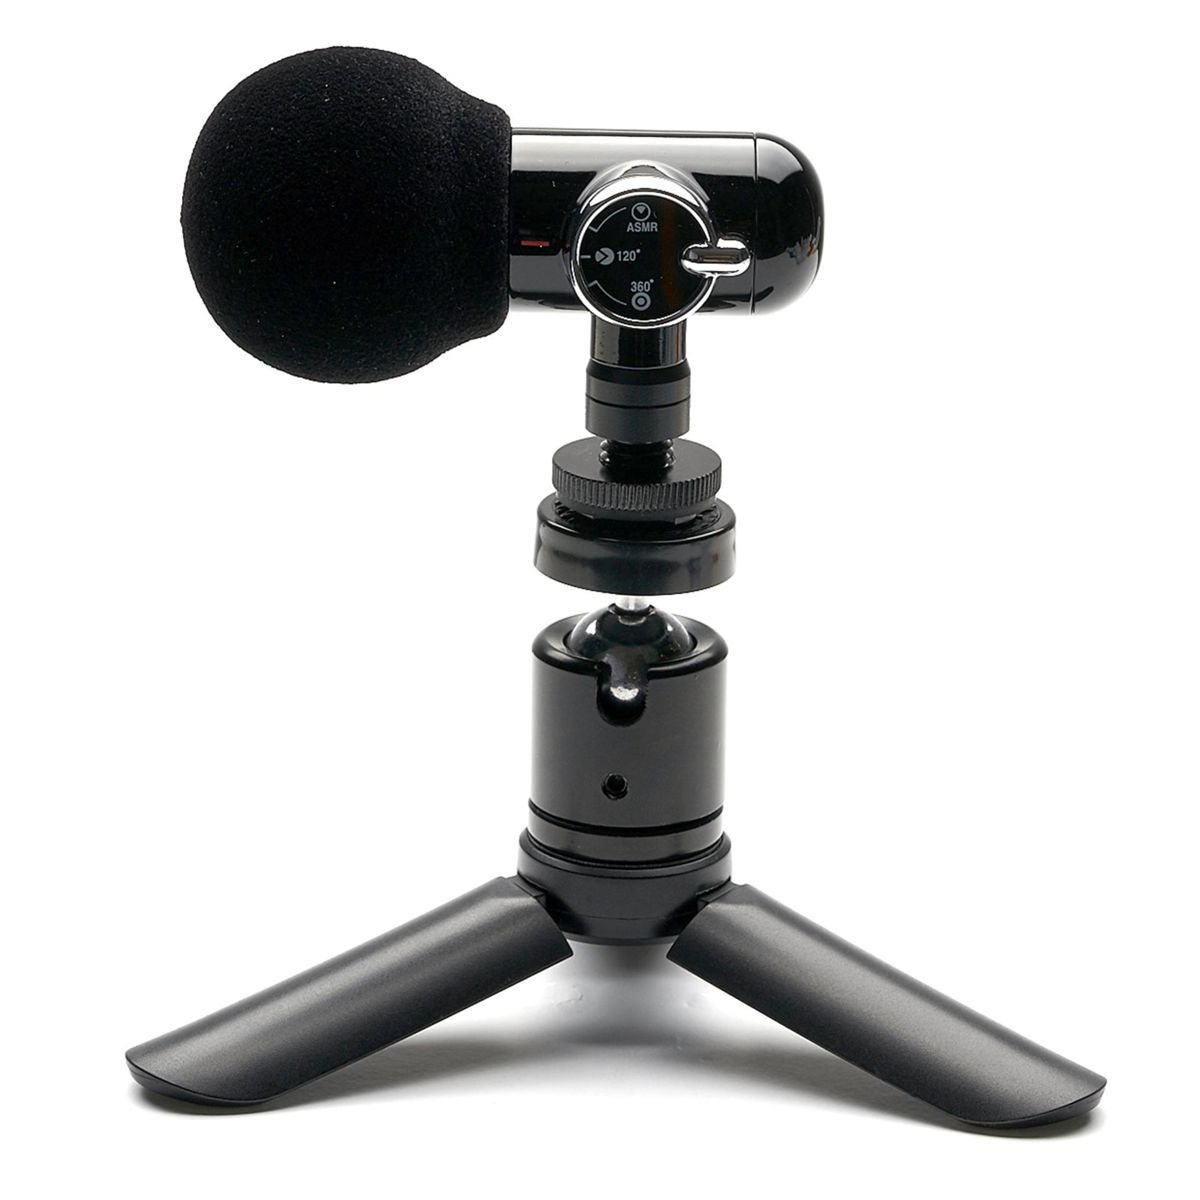 ORANGEMONKIE Kit Q-Mic Video Mikrofon